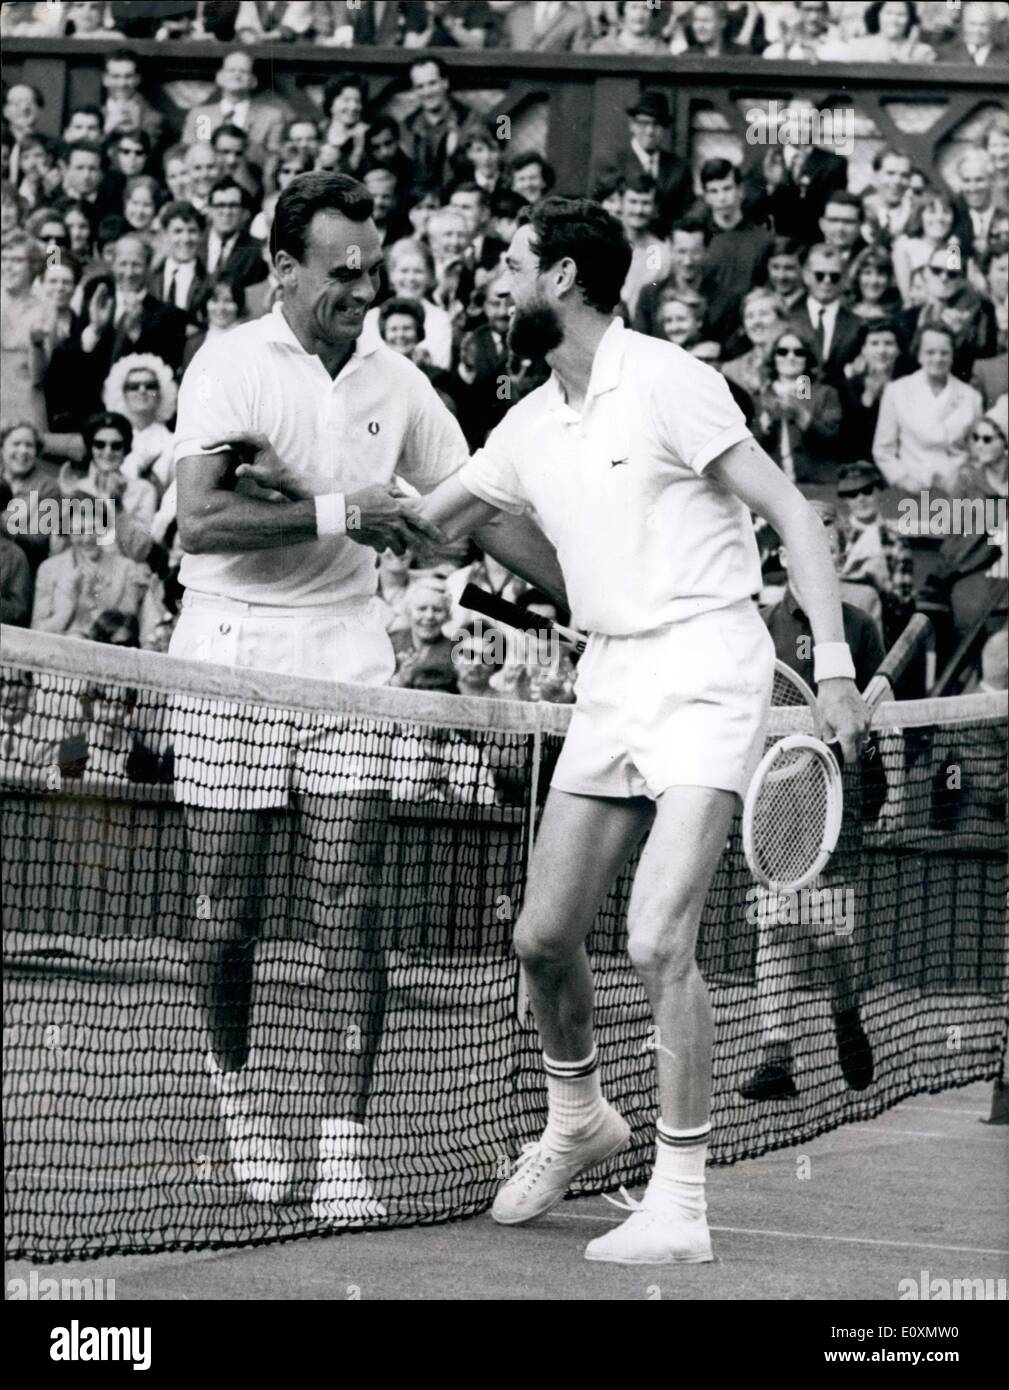 Jun. 06, 1967 - Wimbledon Tennis Championships N.V. Seixas (USA) Beat J. Ulrich (Denmark); Photo Shows N.V. Seixas (USA) received congratulations from J. Ulrich (Denmark) on right after their match yesterday. Seixas won 6-3, 6-4, 3-6, 6-3. Stock Photo